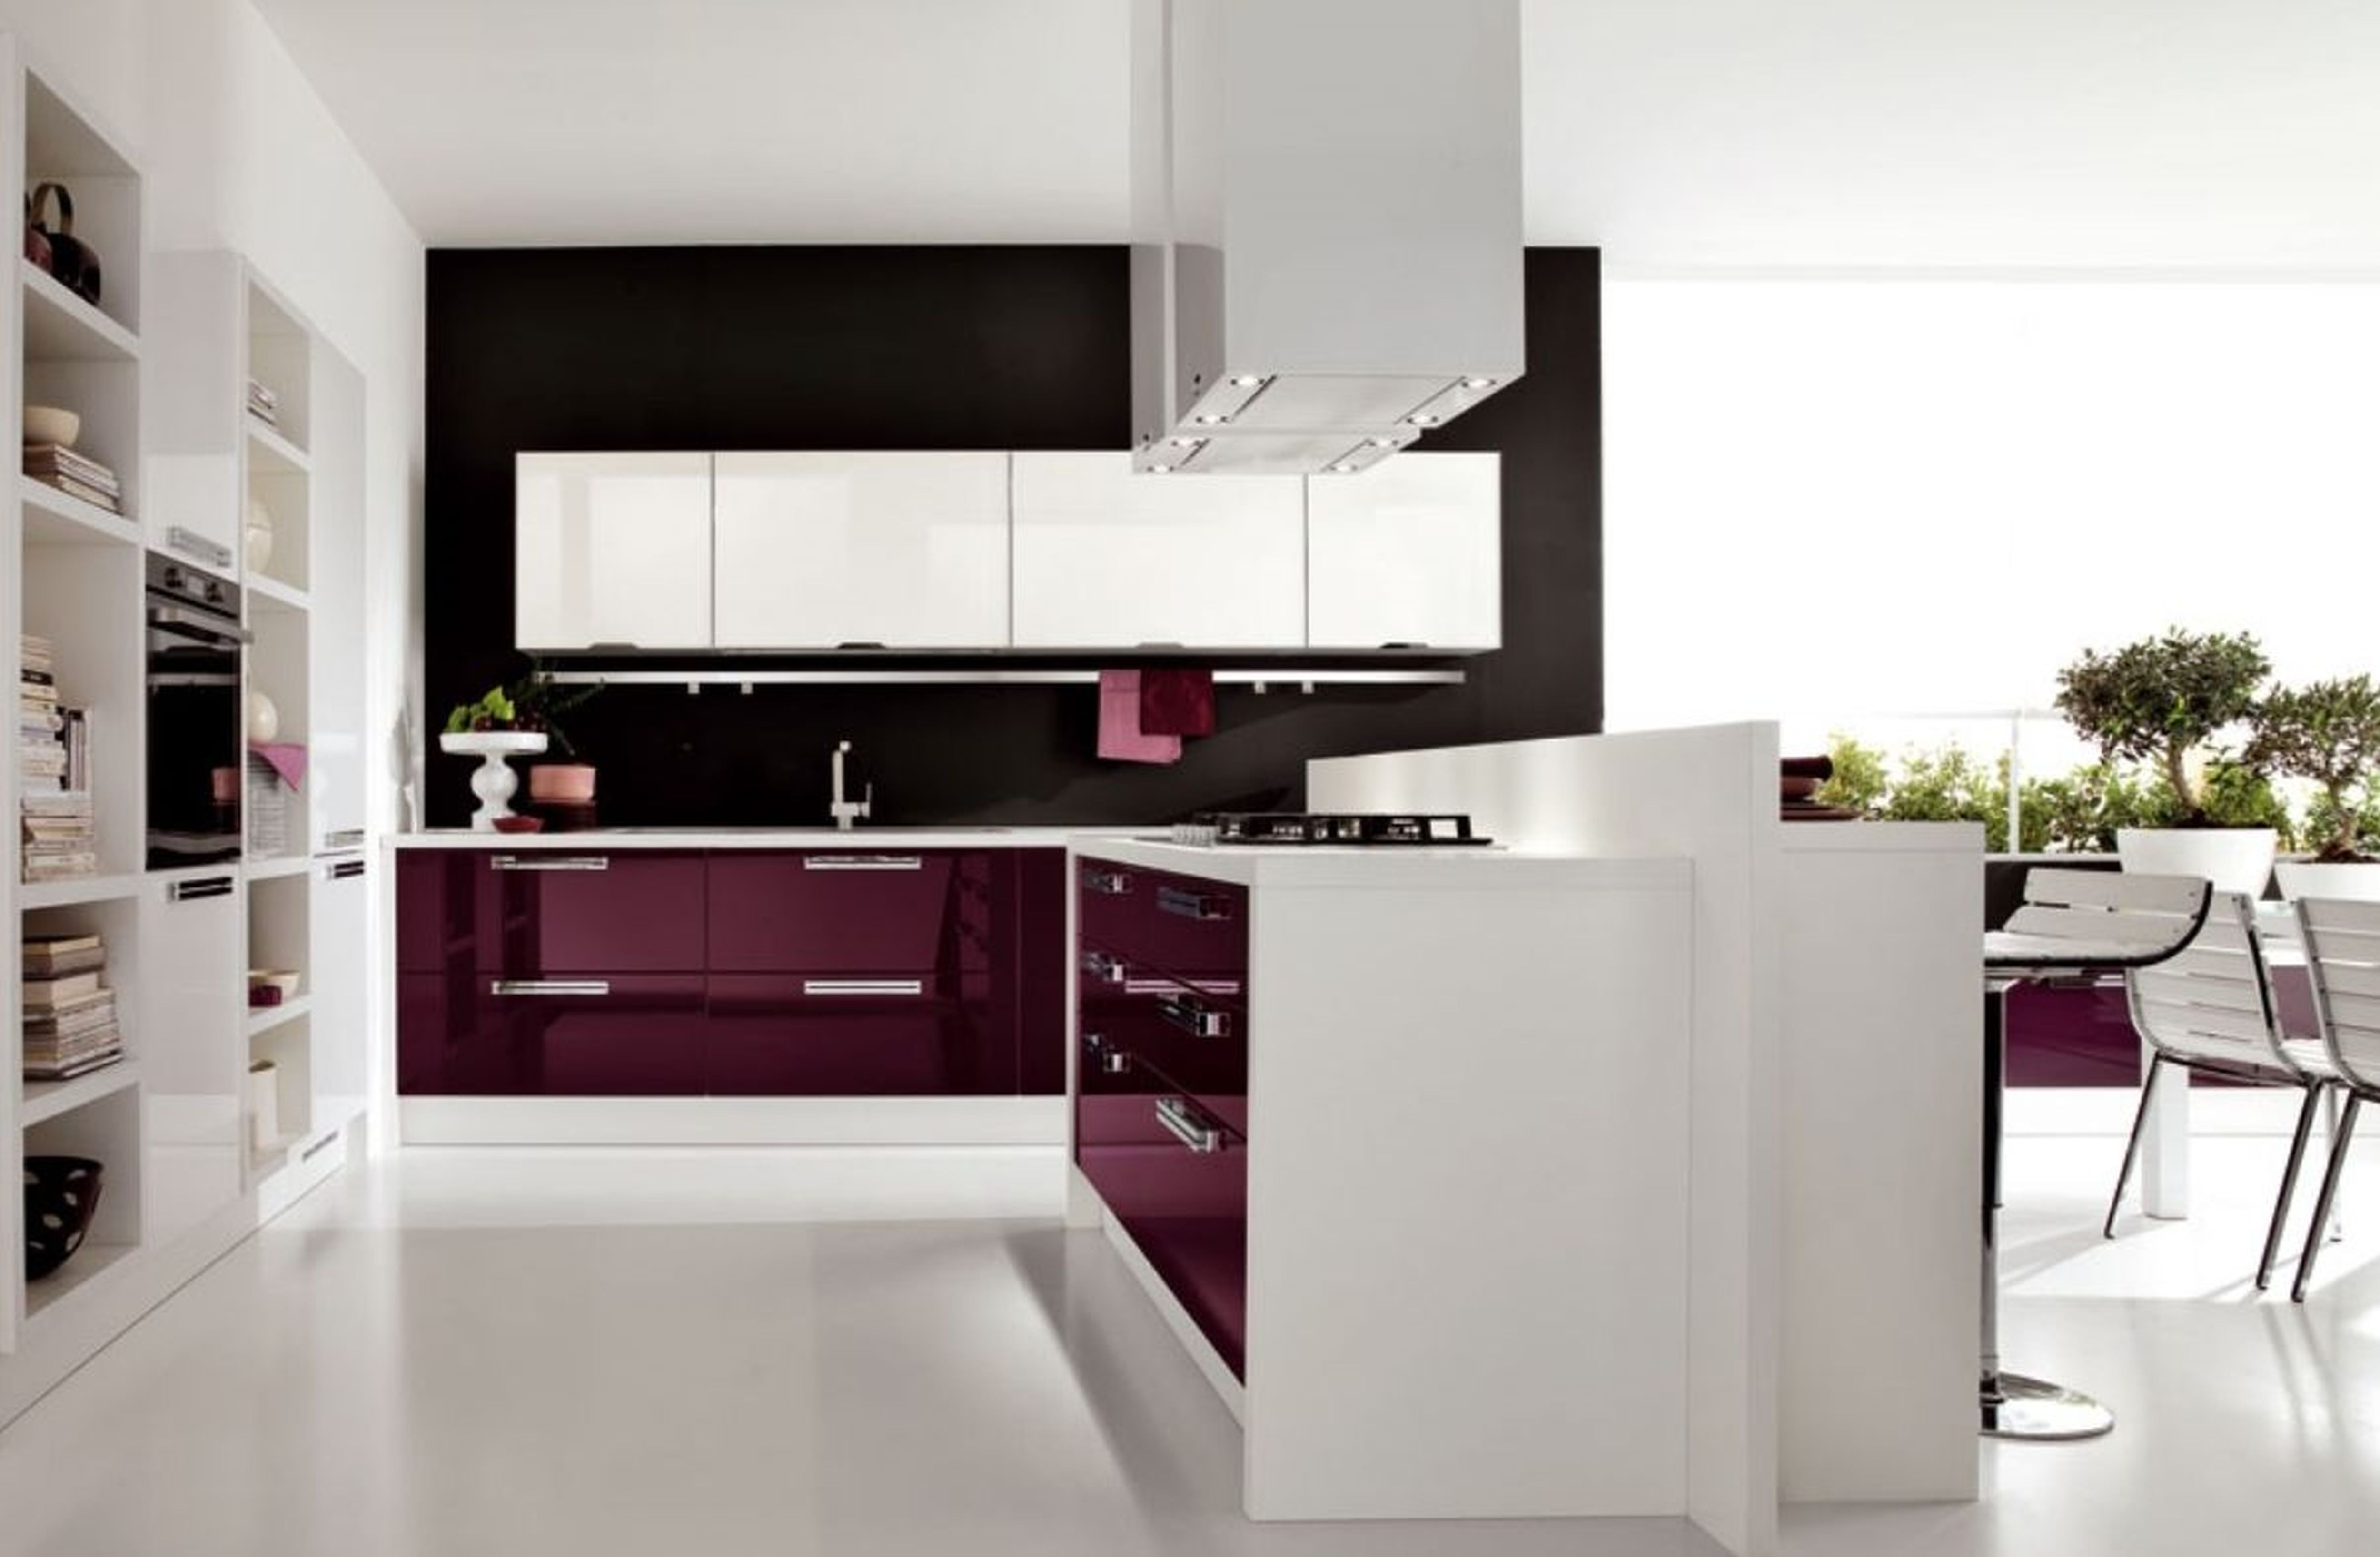 dapur modern dengan warna putih ungu menjadi pilihan pada kabinet